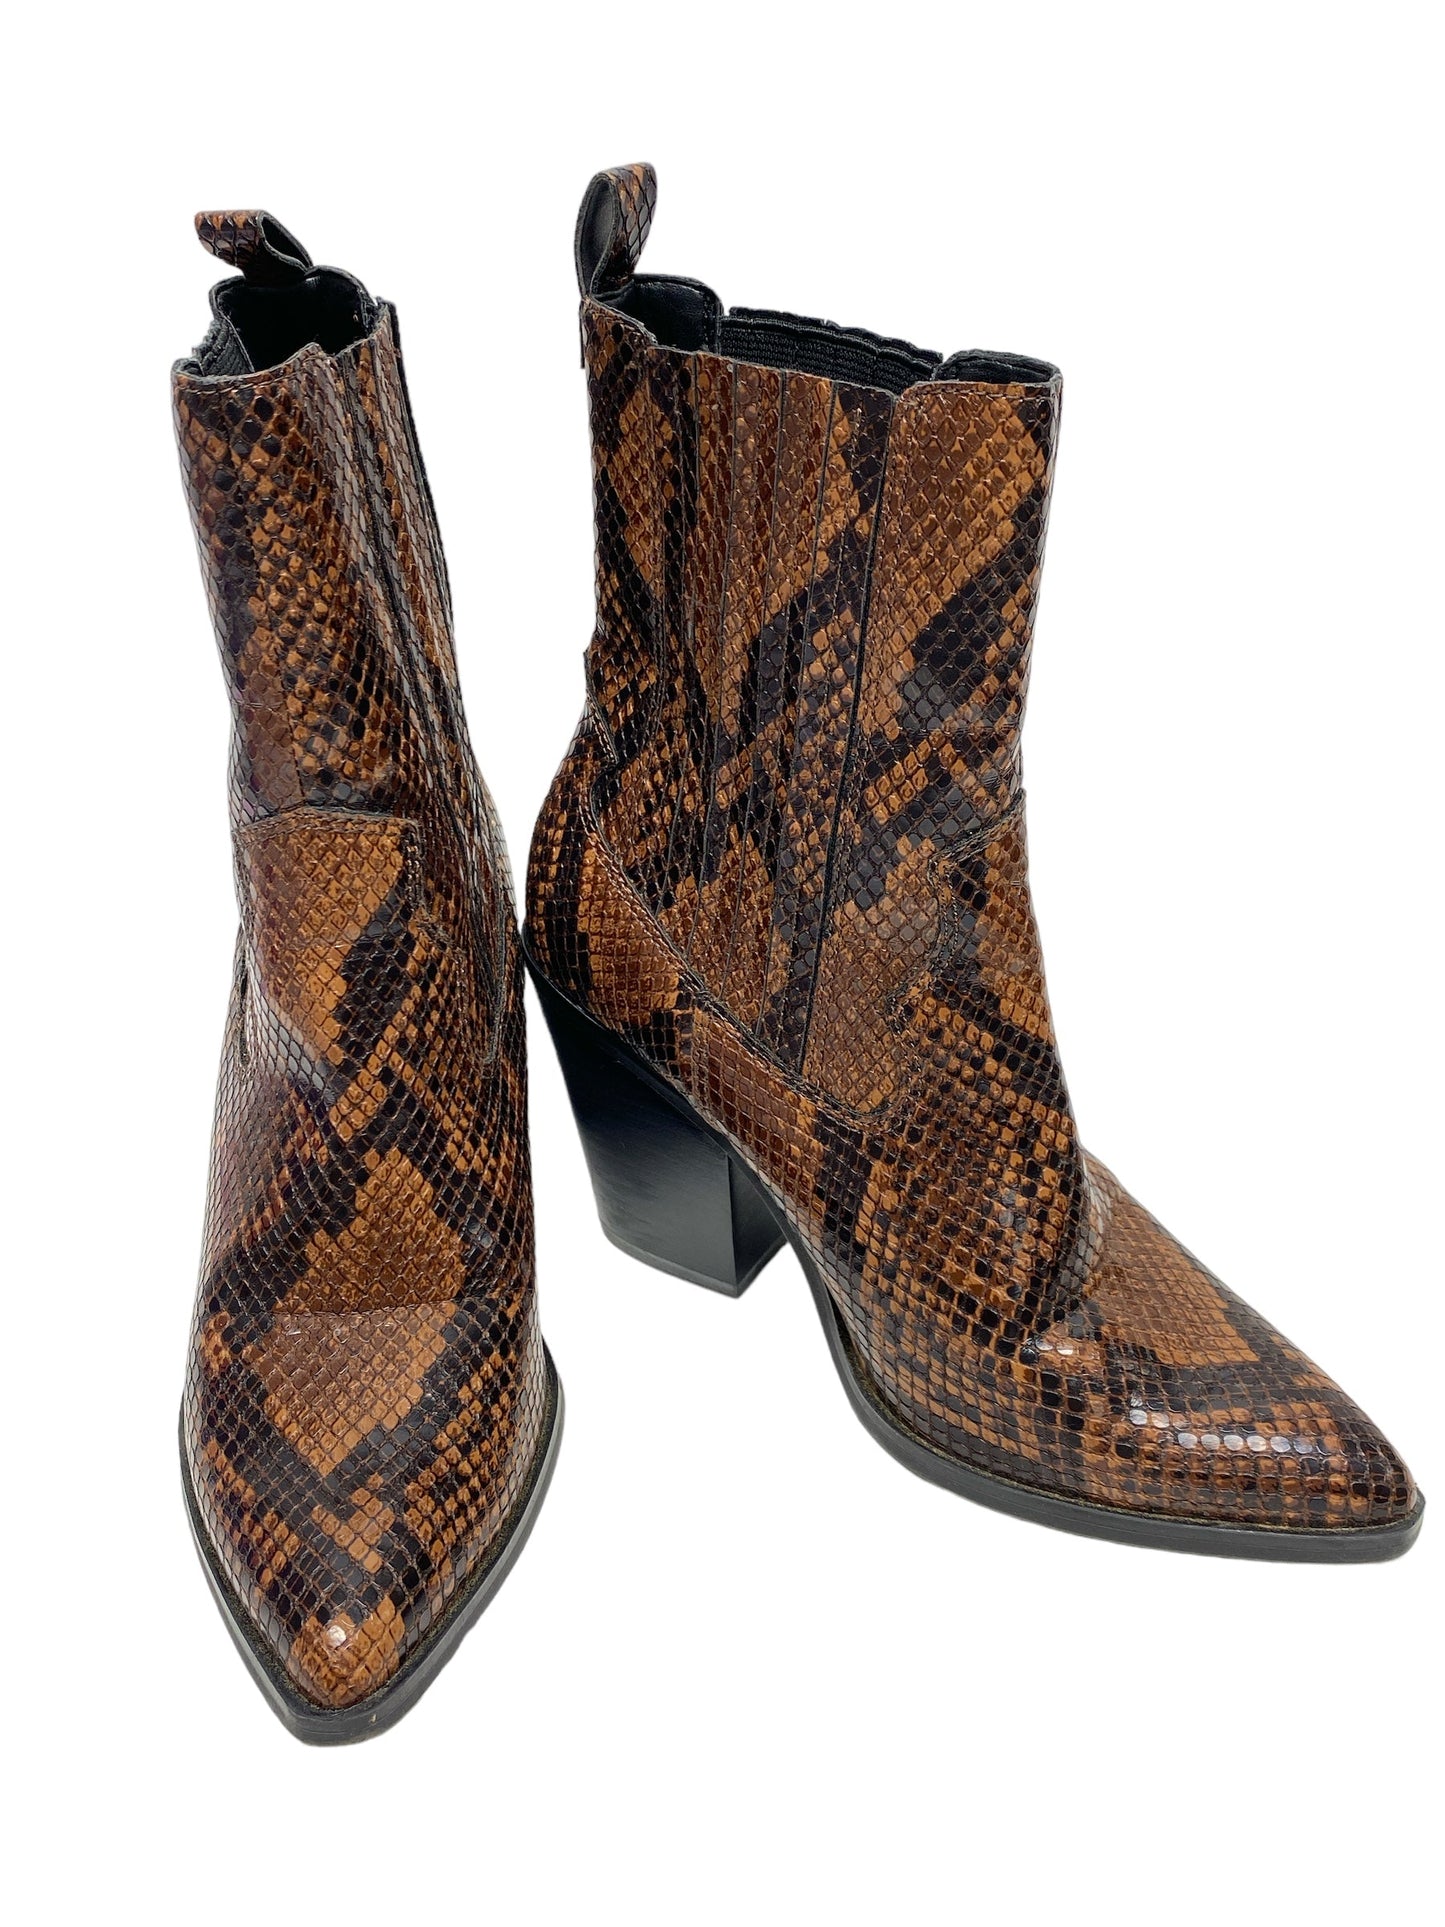 Snakeskin Print Boots Ankle Heels Aldo, Size 6.5